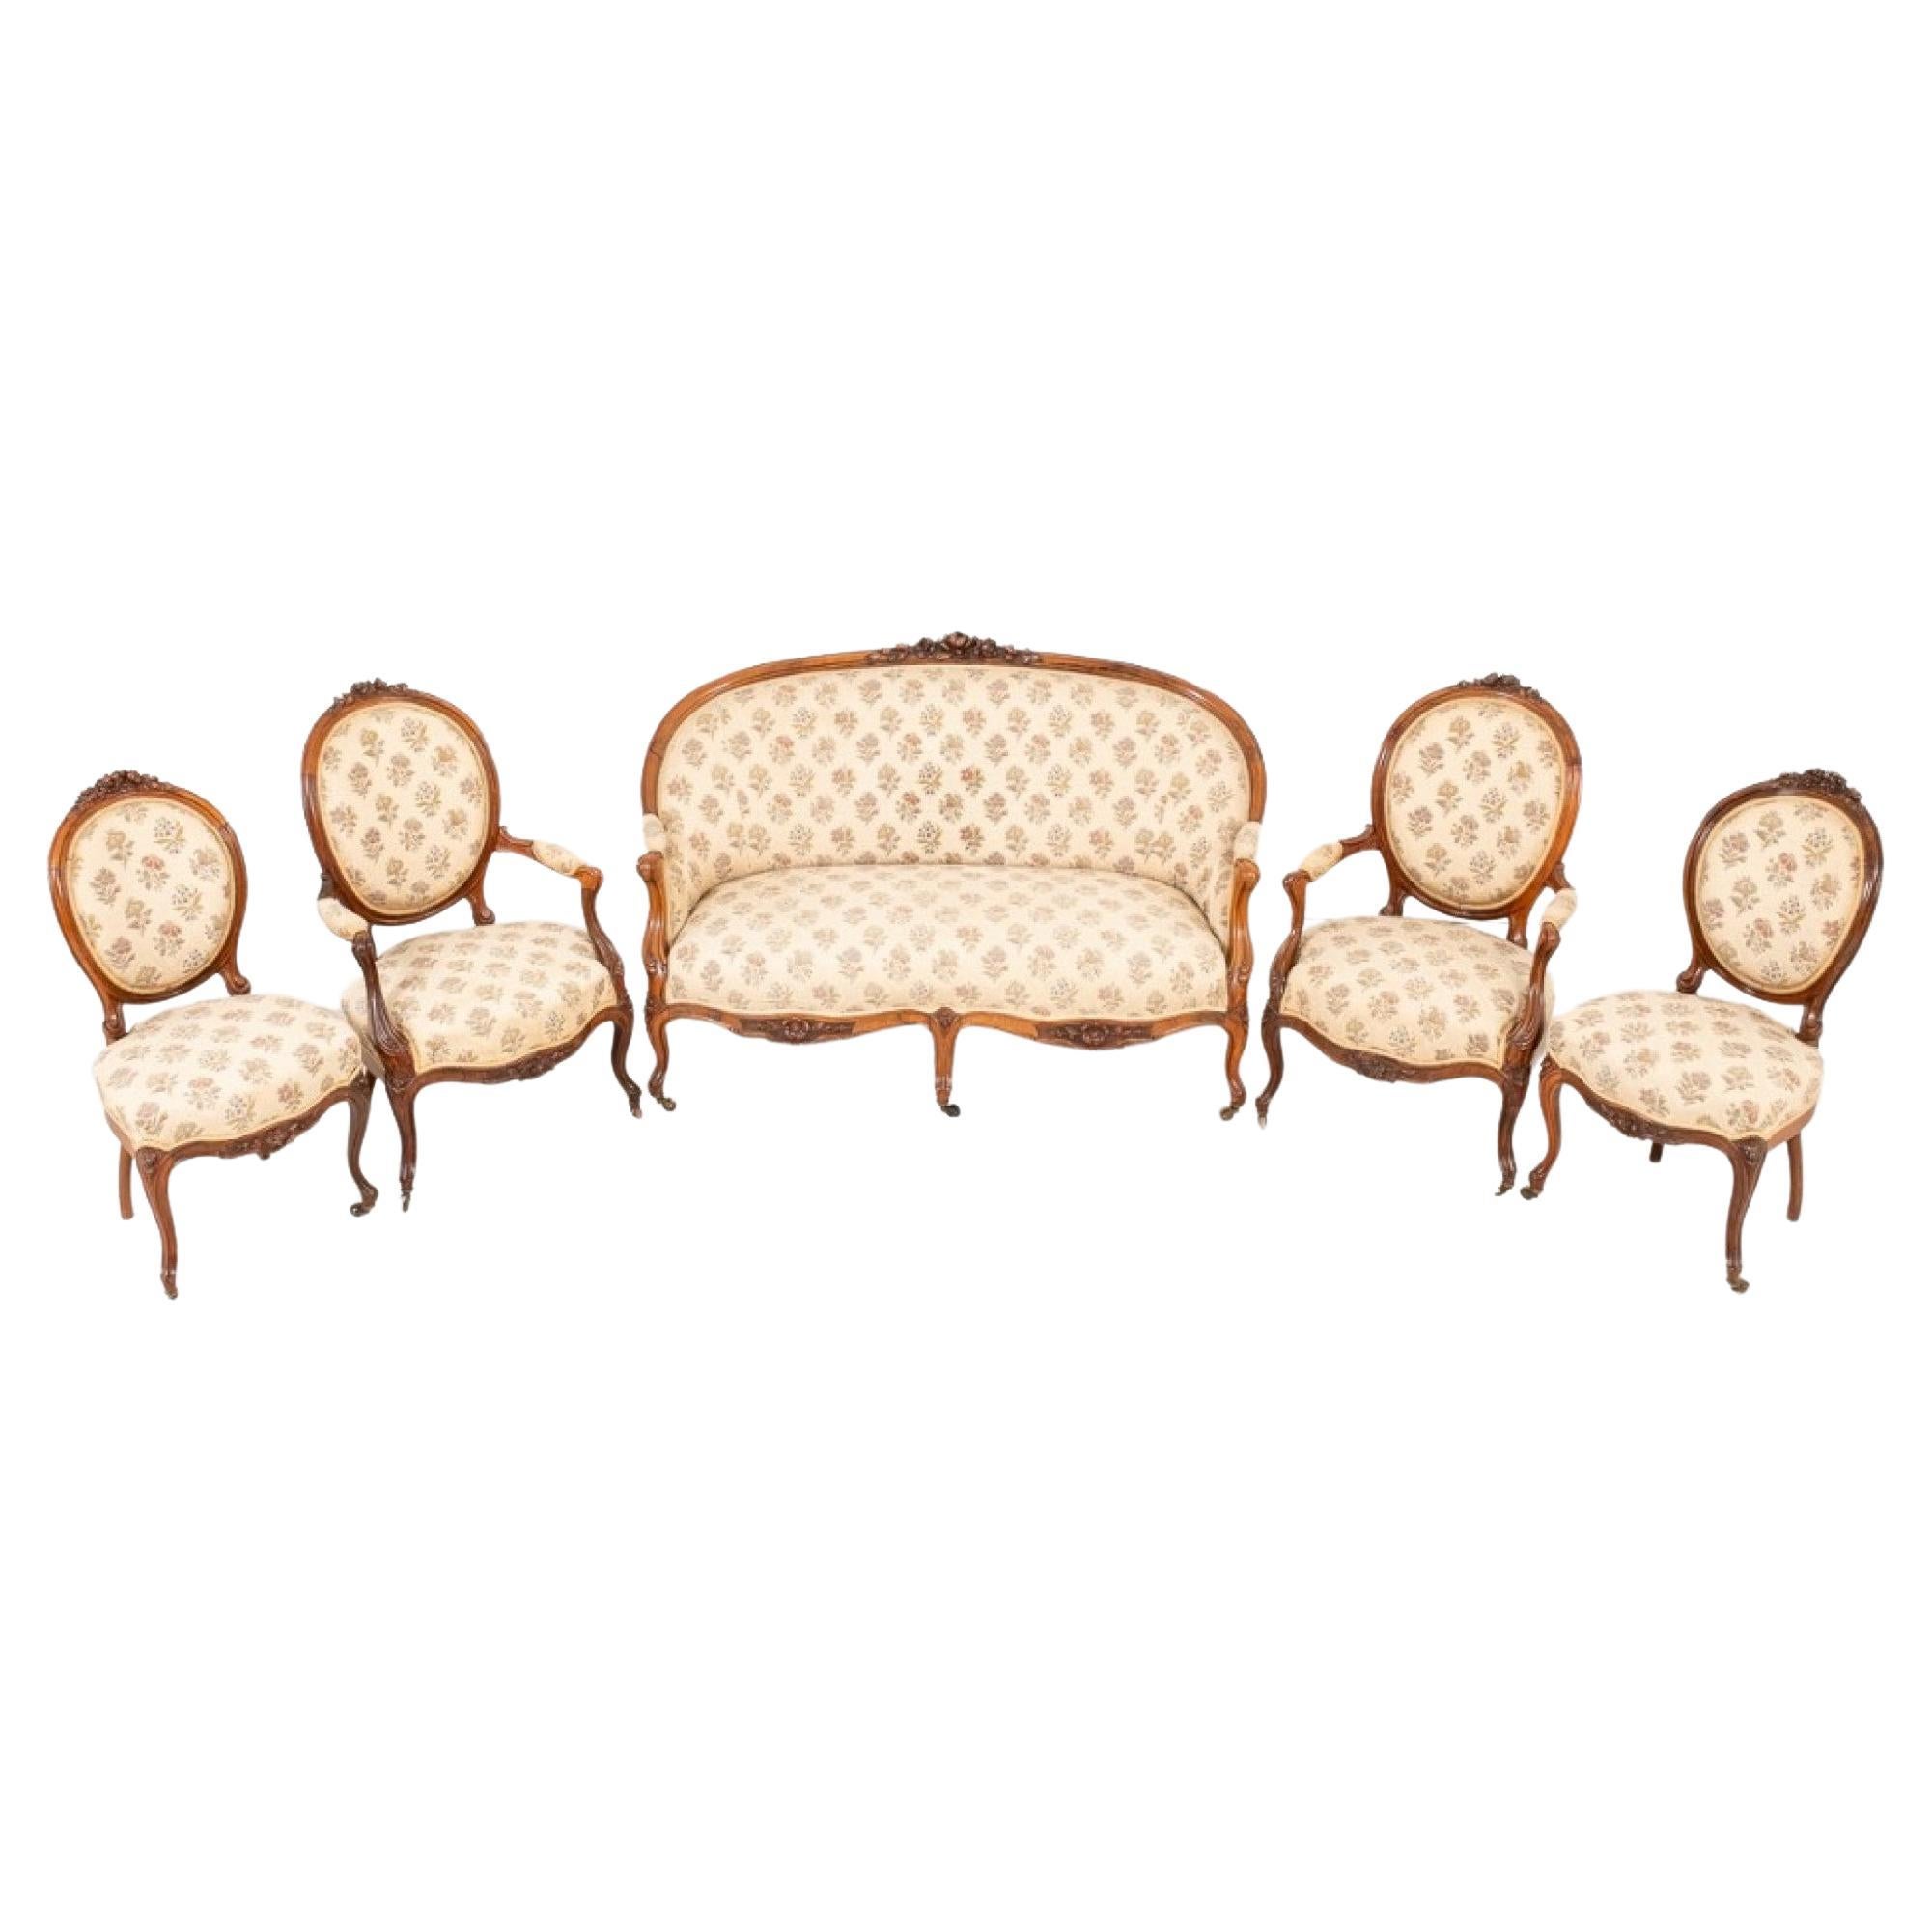 Victorian Settee Chair Set Antique Couch Parlour Suite, 1860